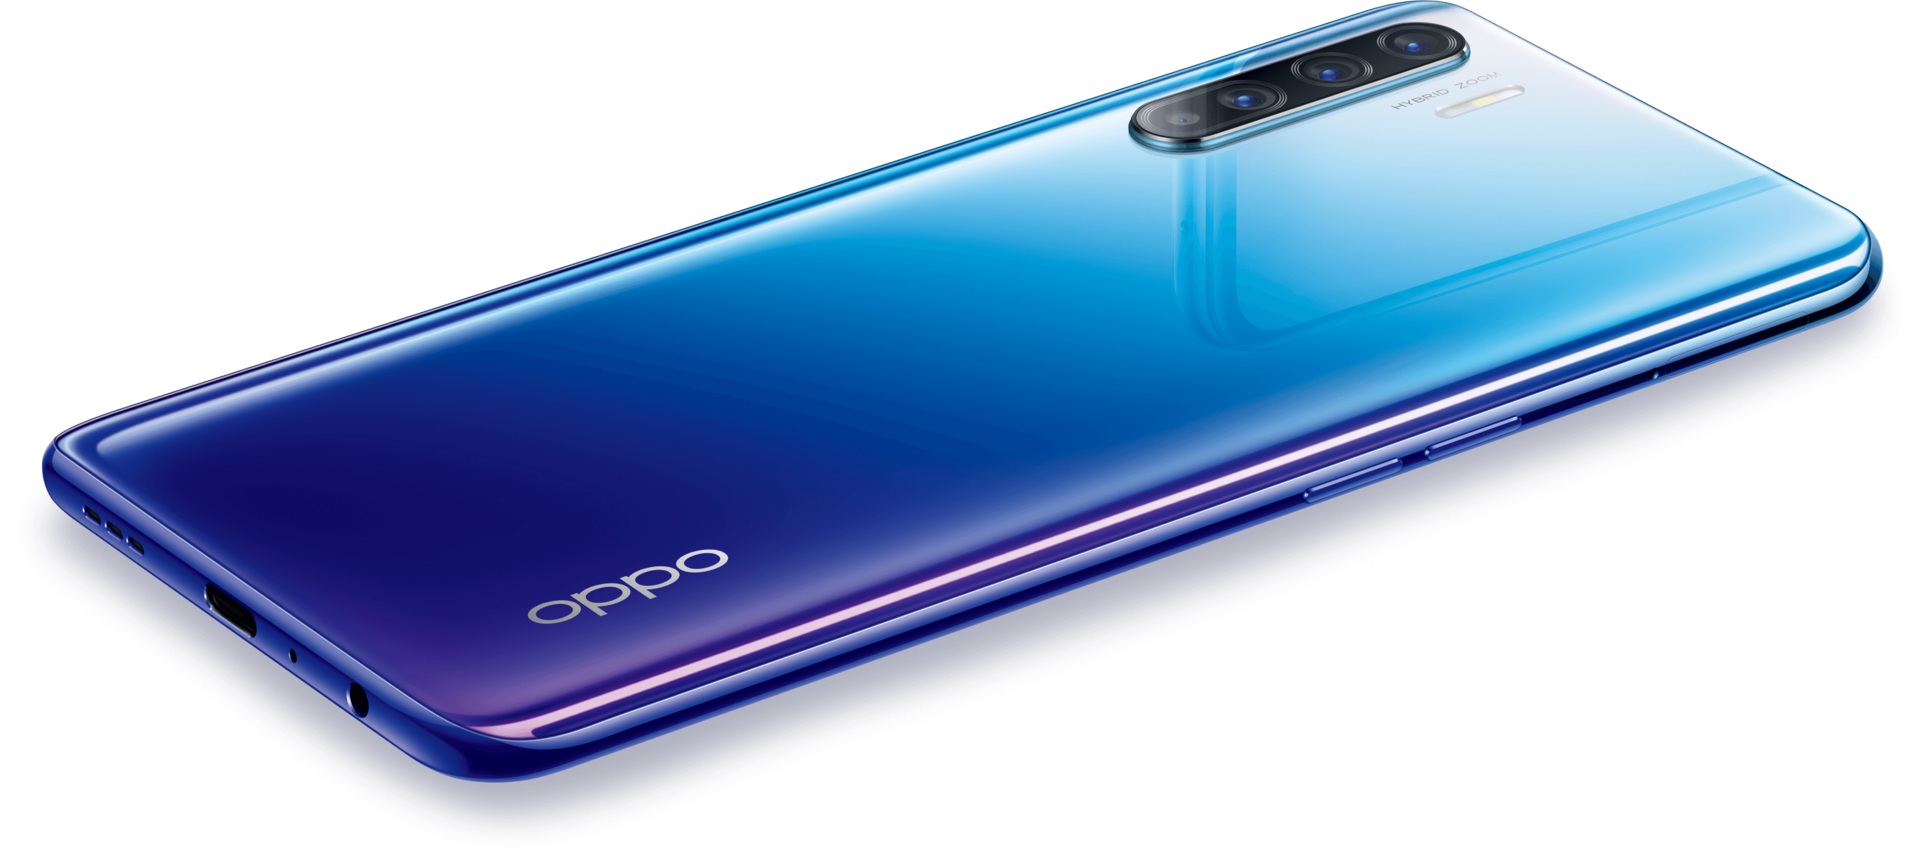 OPPO在全球范围内推出Reno3的4G / LTE版本